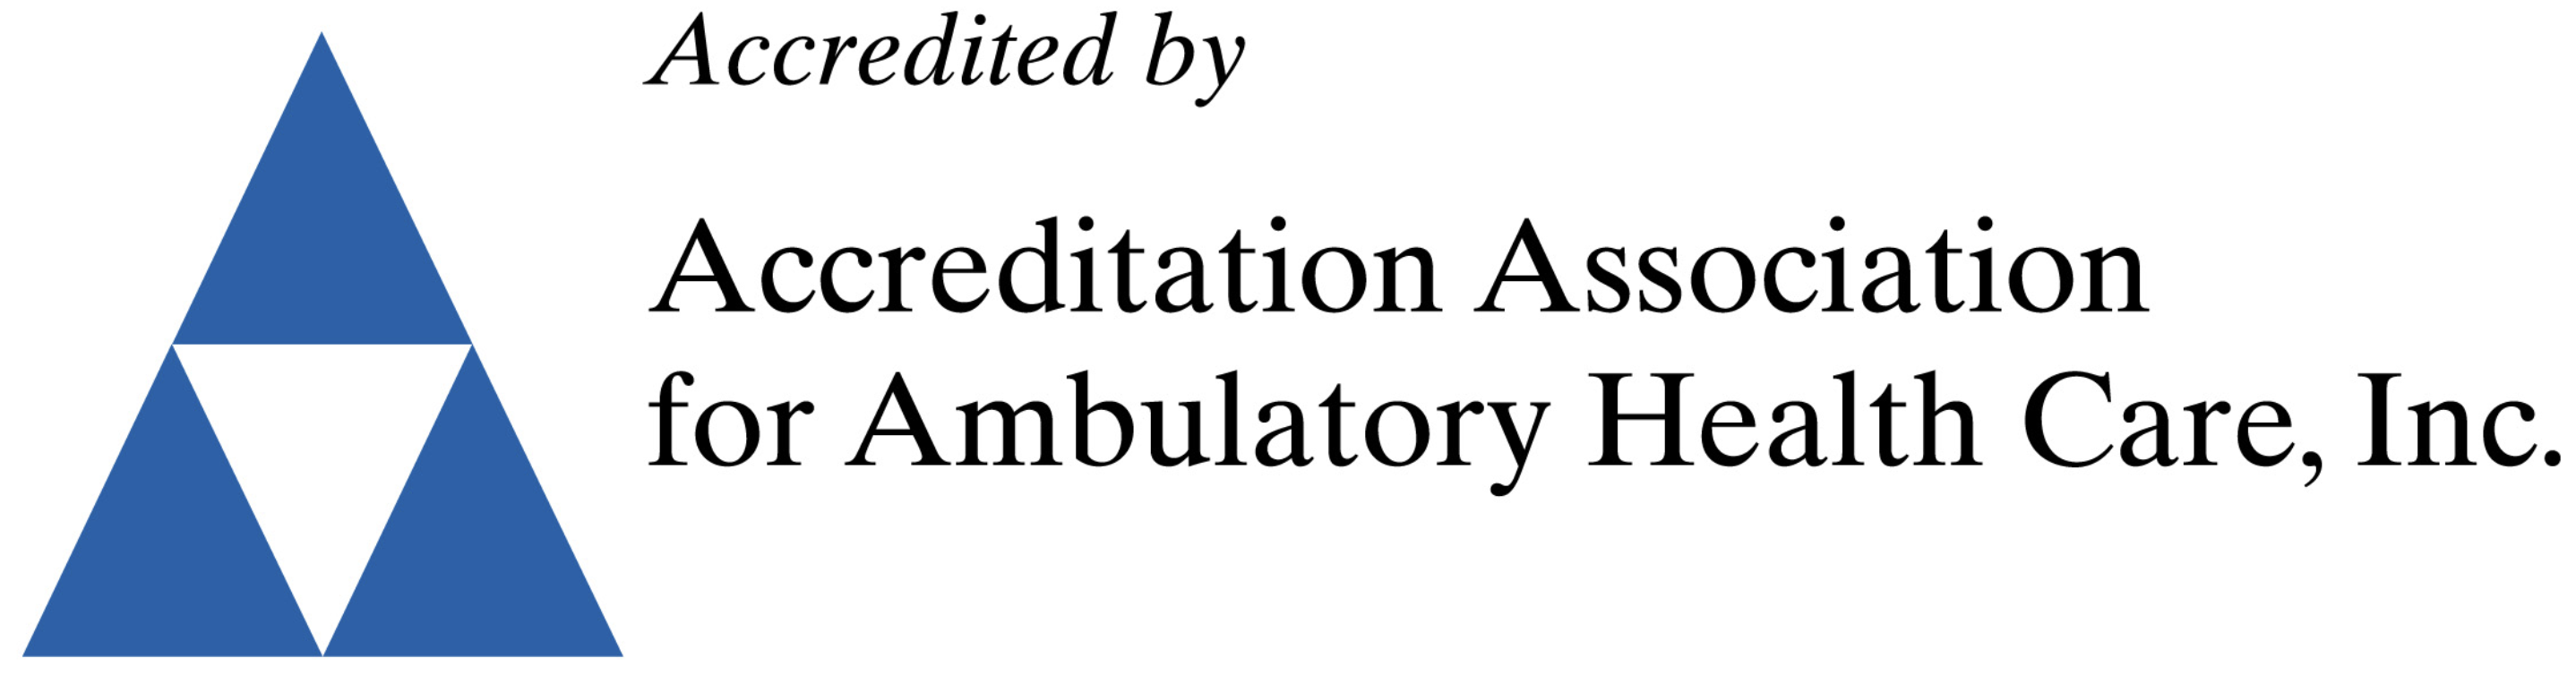 accreditation association for ambulatory health care